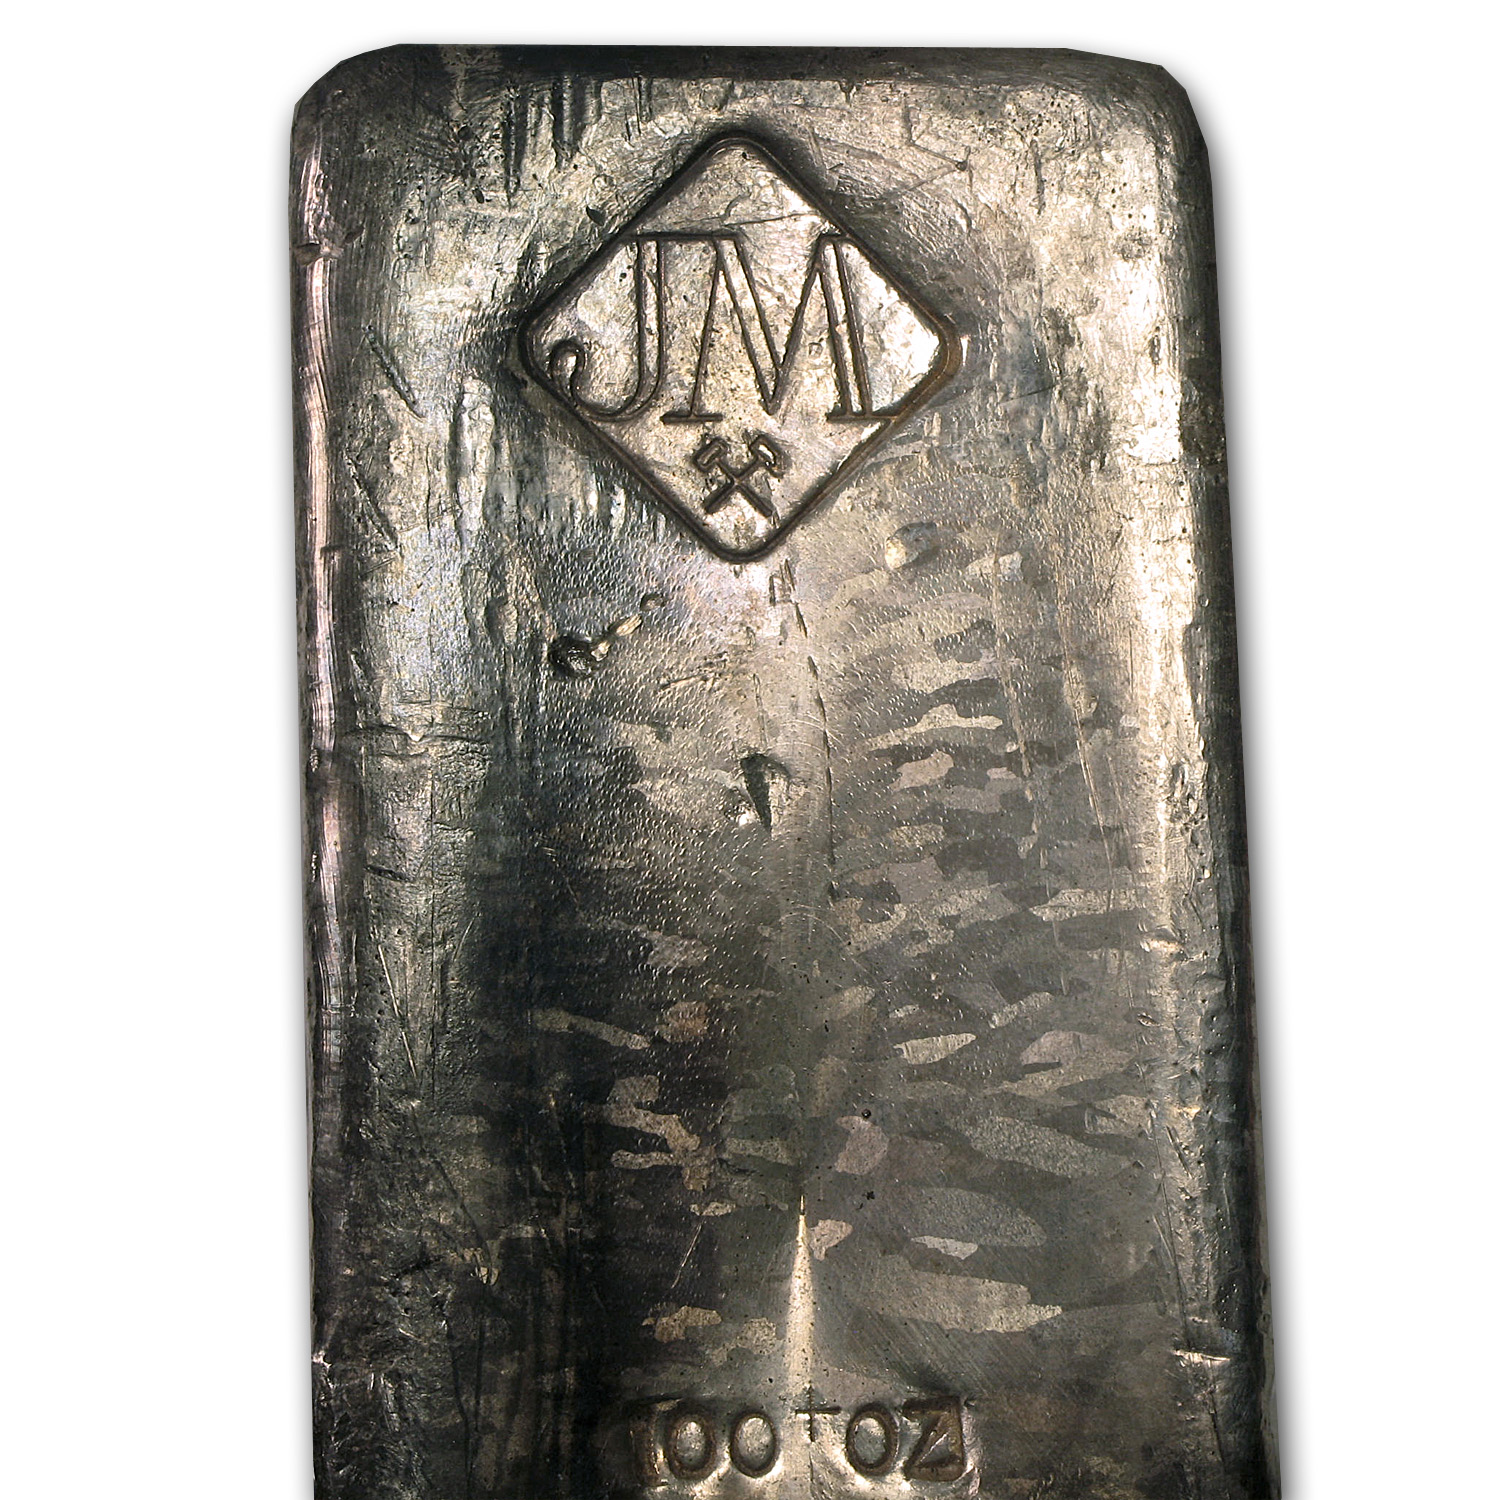 johnson matthey 100 oz silver bar serial number 48557